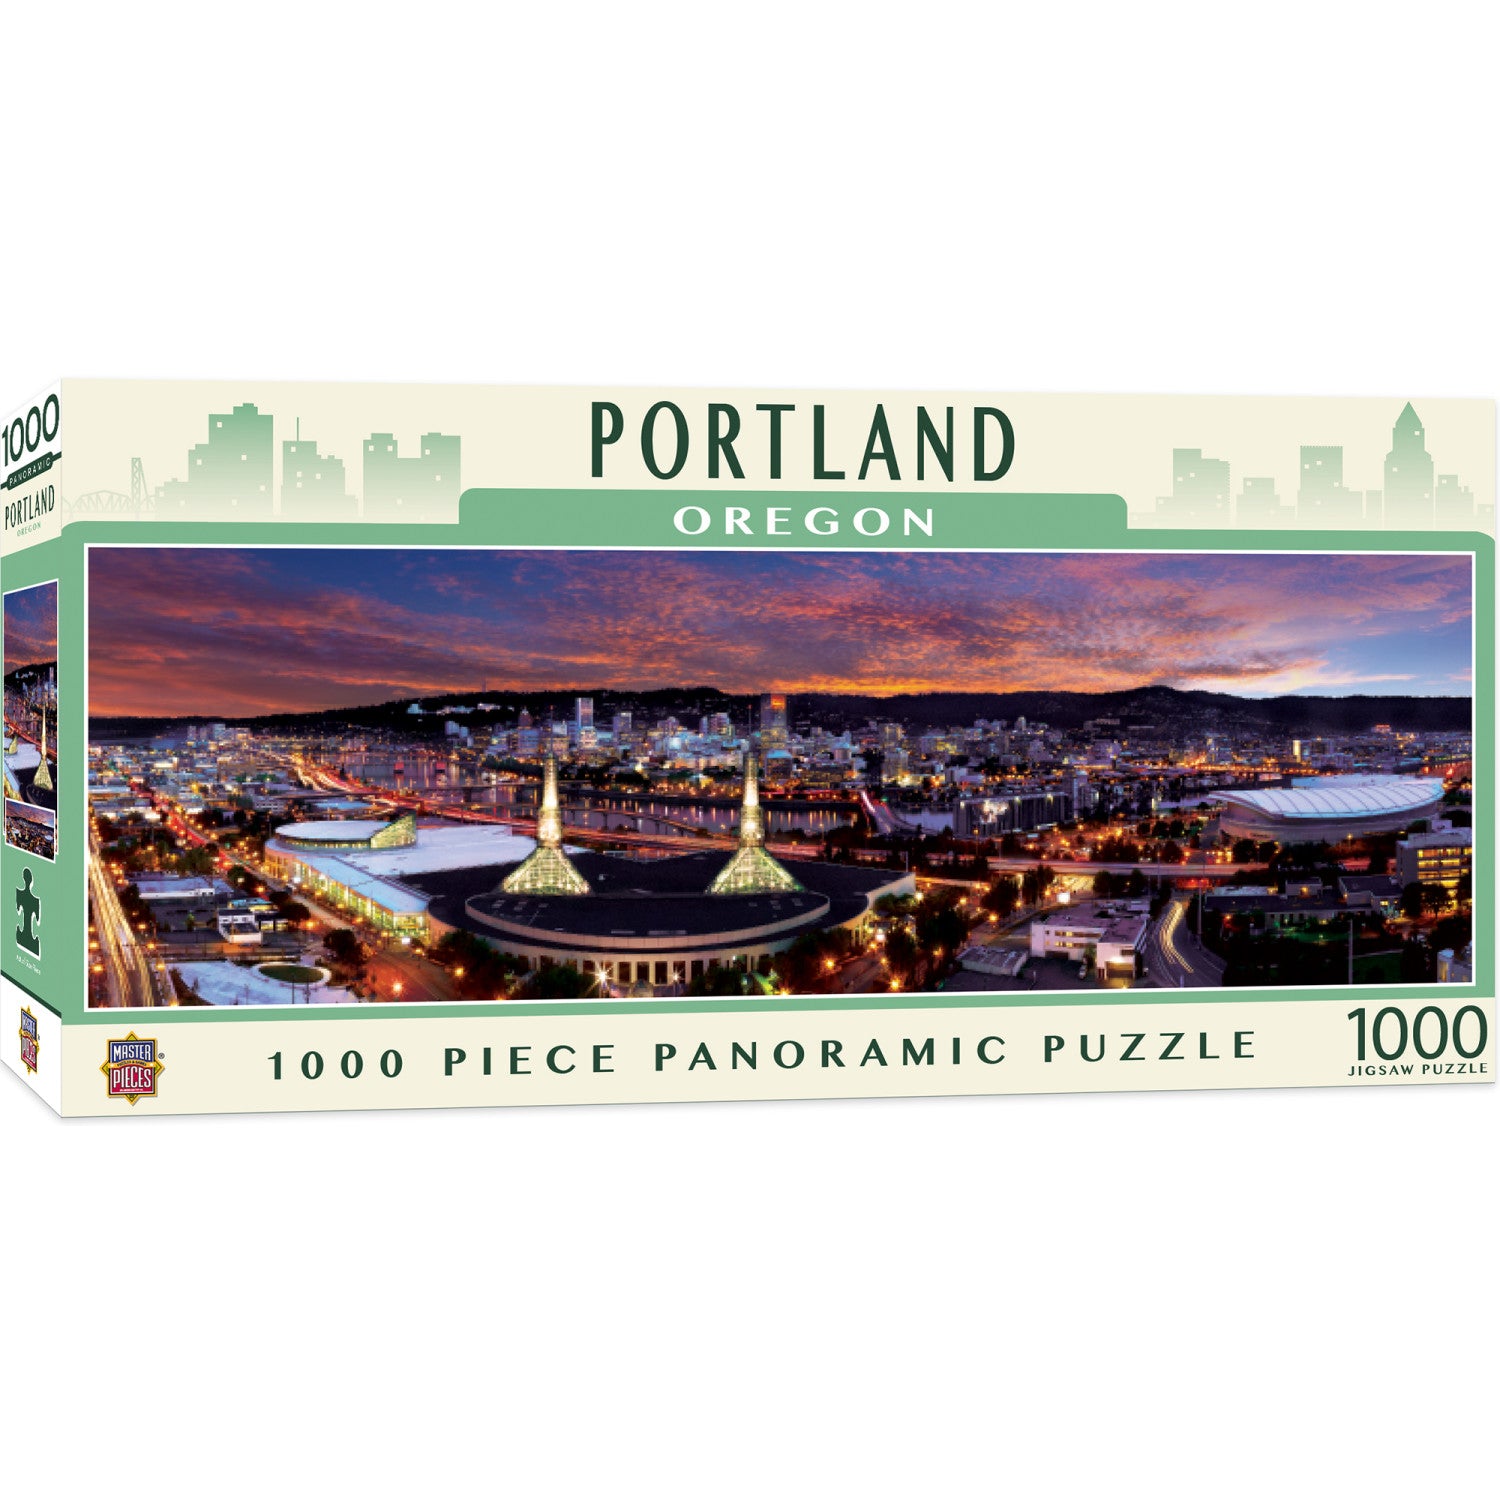 Portland, Oregon 1000 Piece Panoramic Jigsaw Puzzle